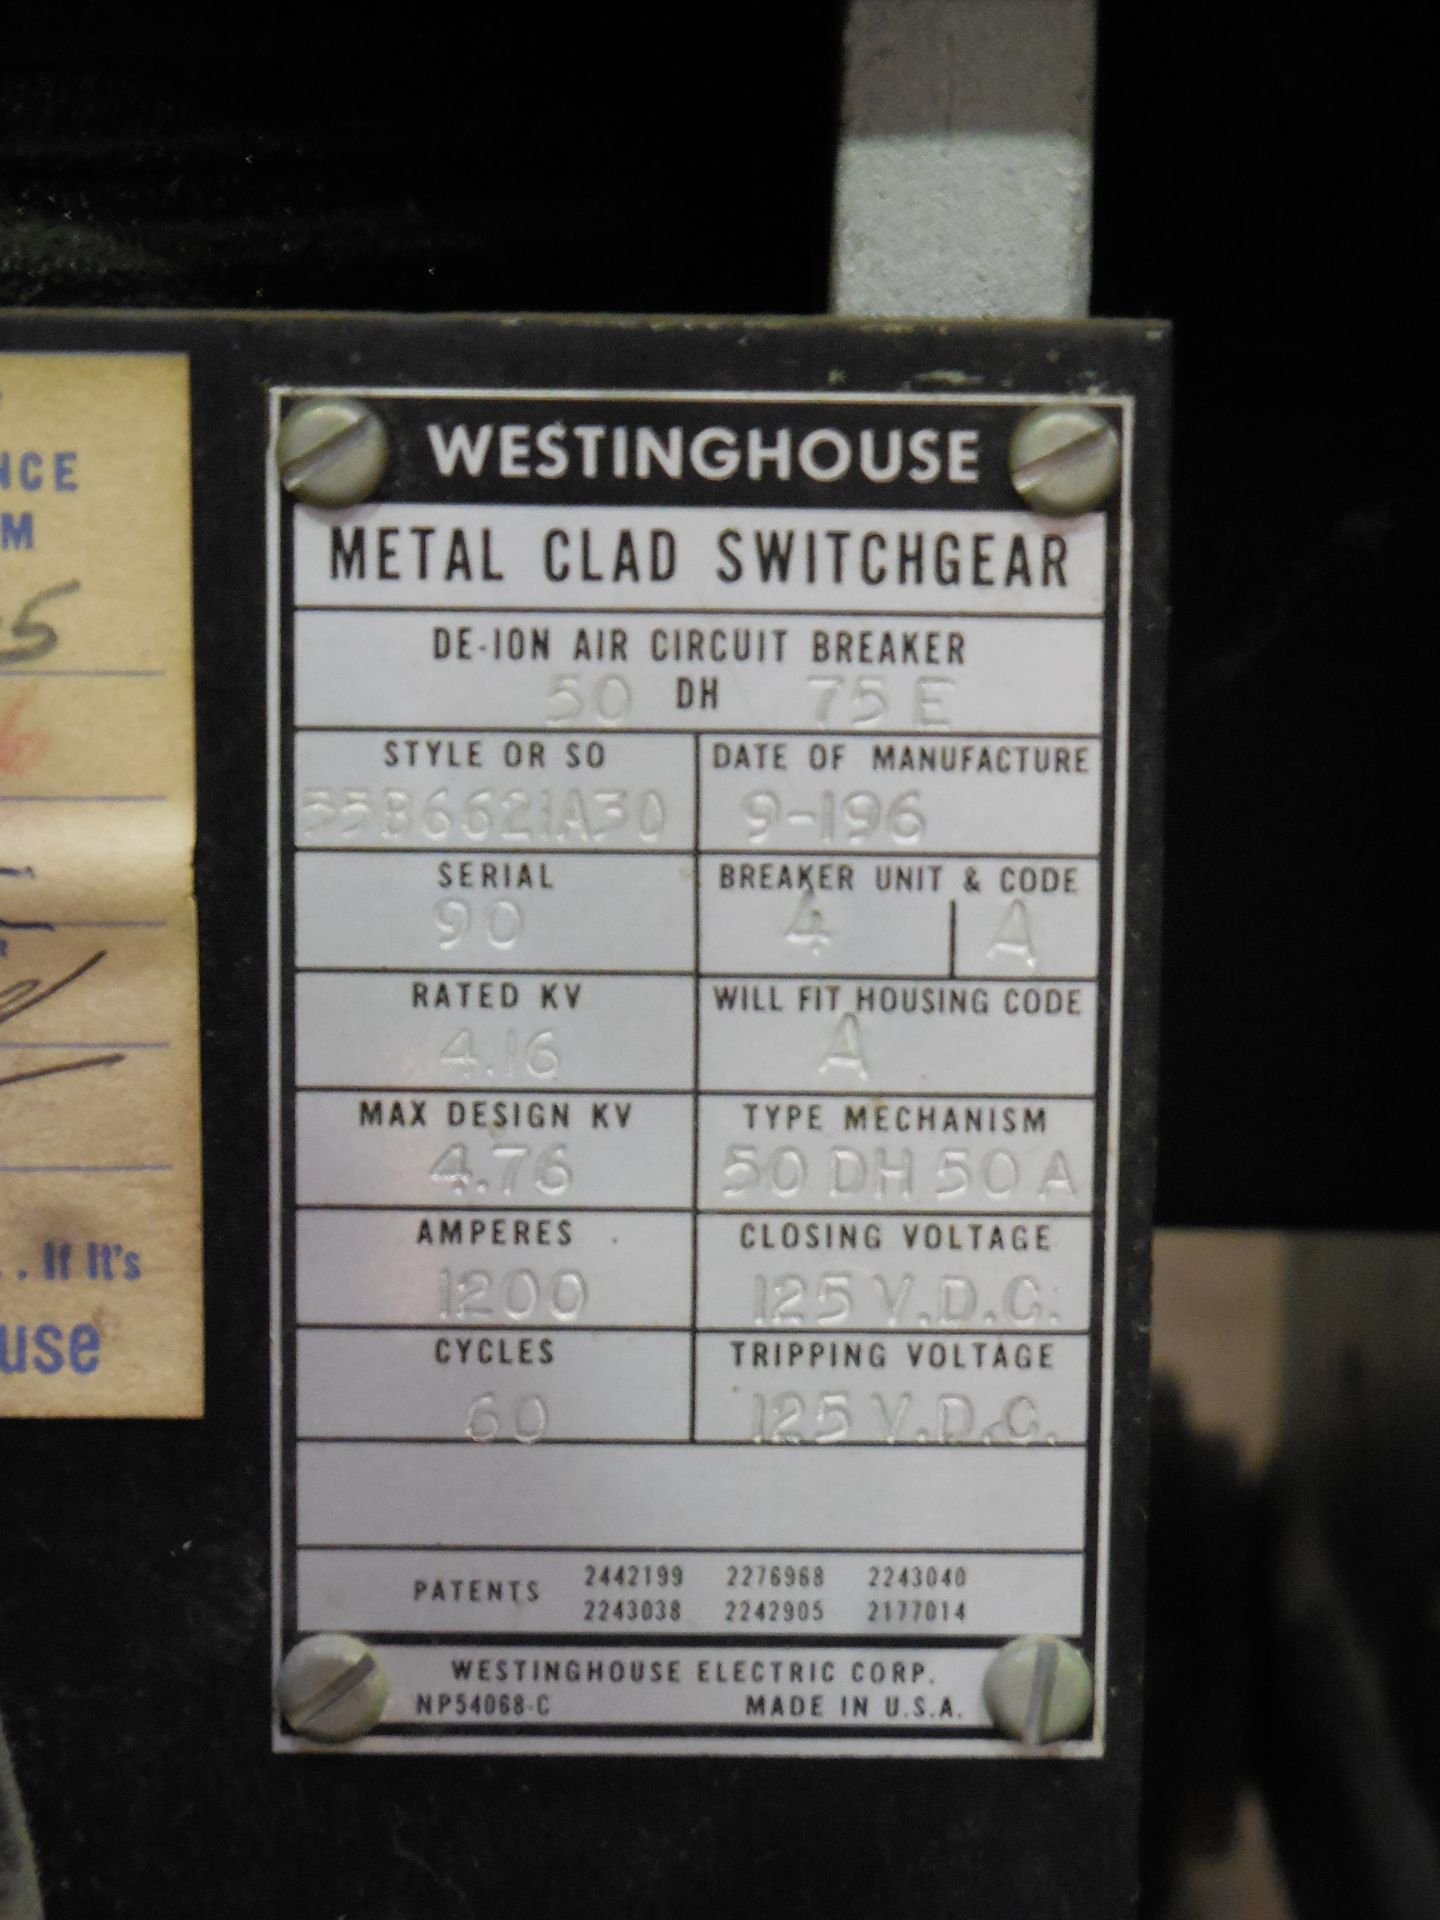 Westinghouse 50DH75E 1200 Amp Metal Clad Switchgear De-Ion Air Circuit Breaker - Image 2 of 10